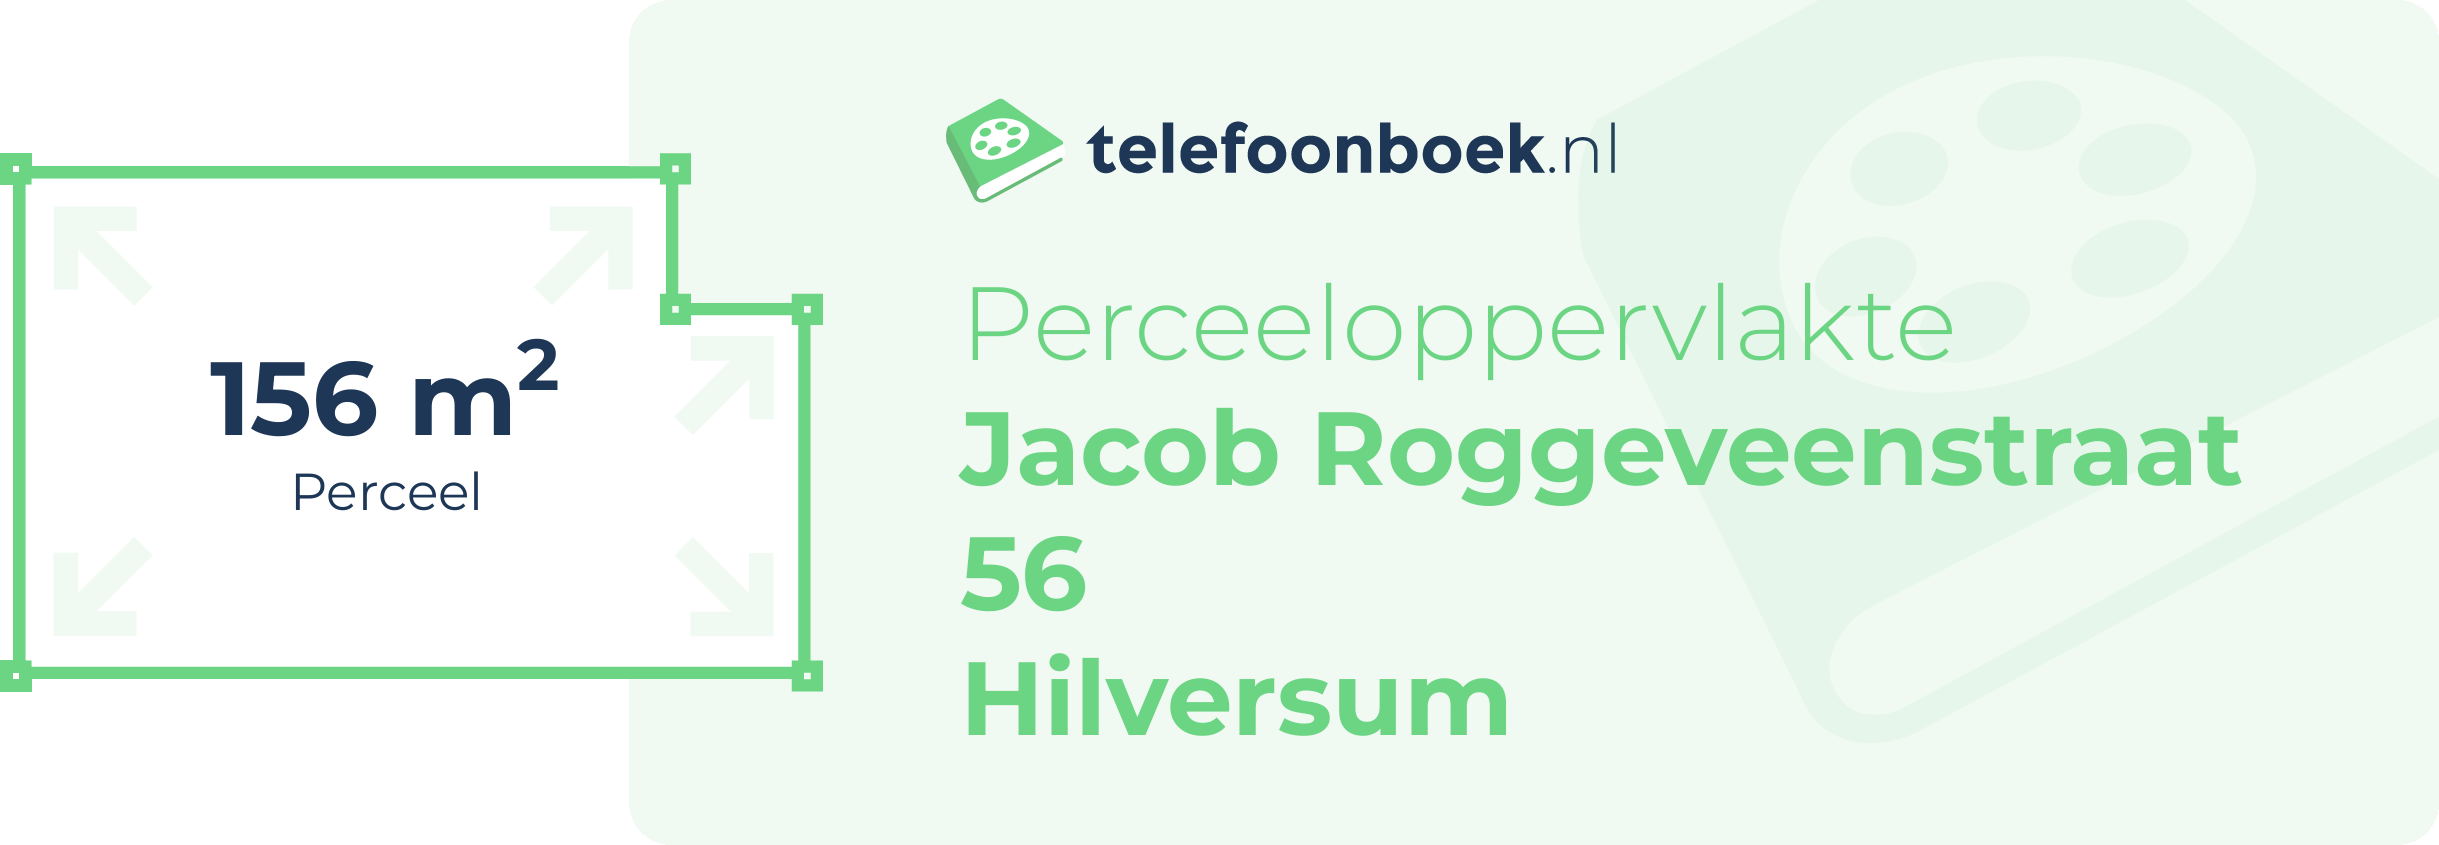 Perceeloppervlakte Jacob Roggeveenstraat 56 Hilversum